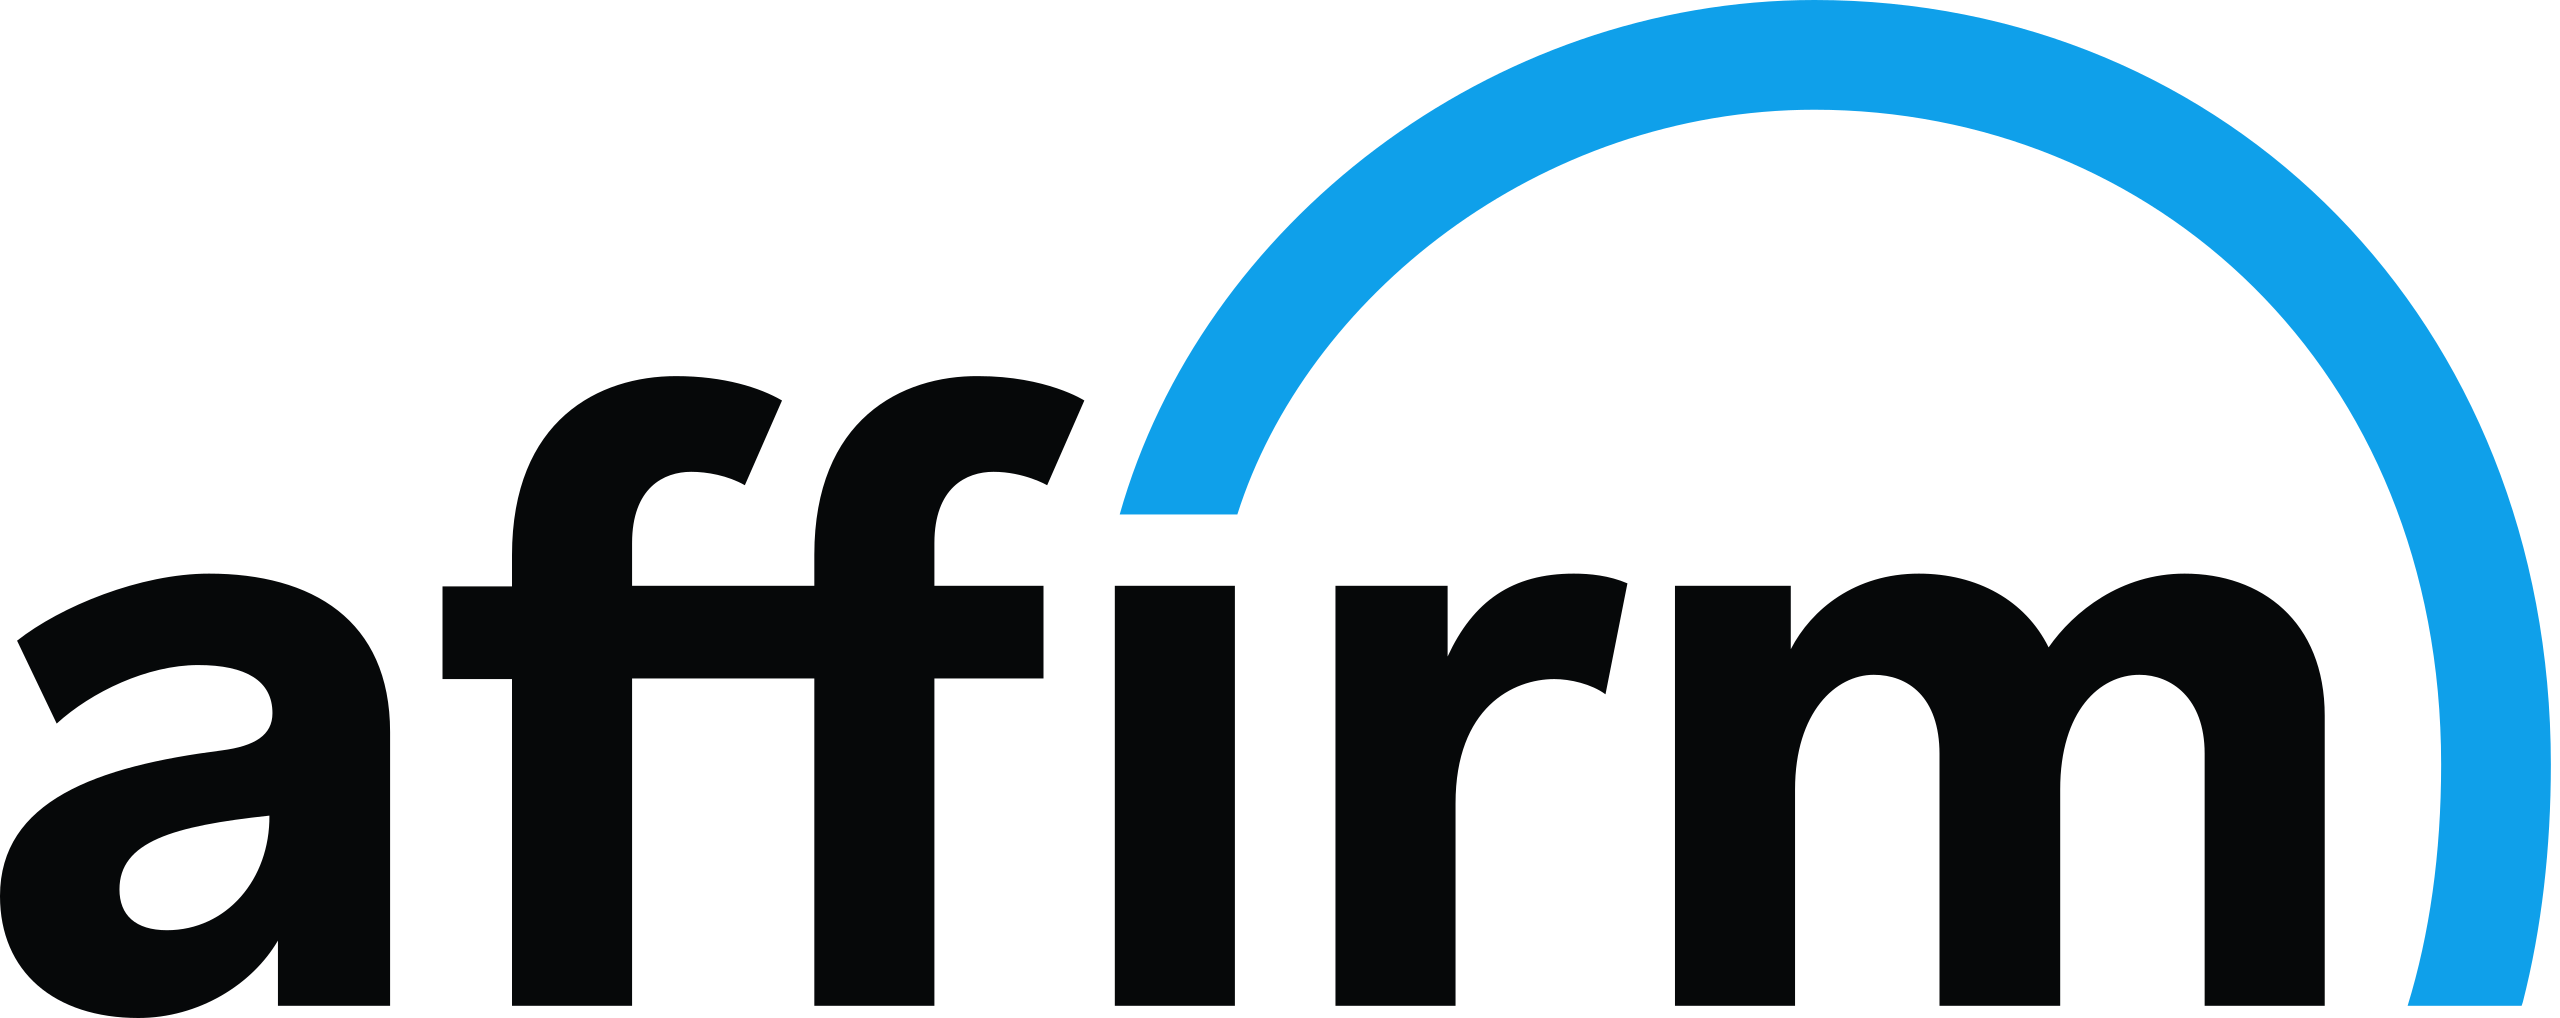 File:Affirm logo.svg - Wikimedia Commons